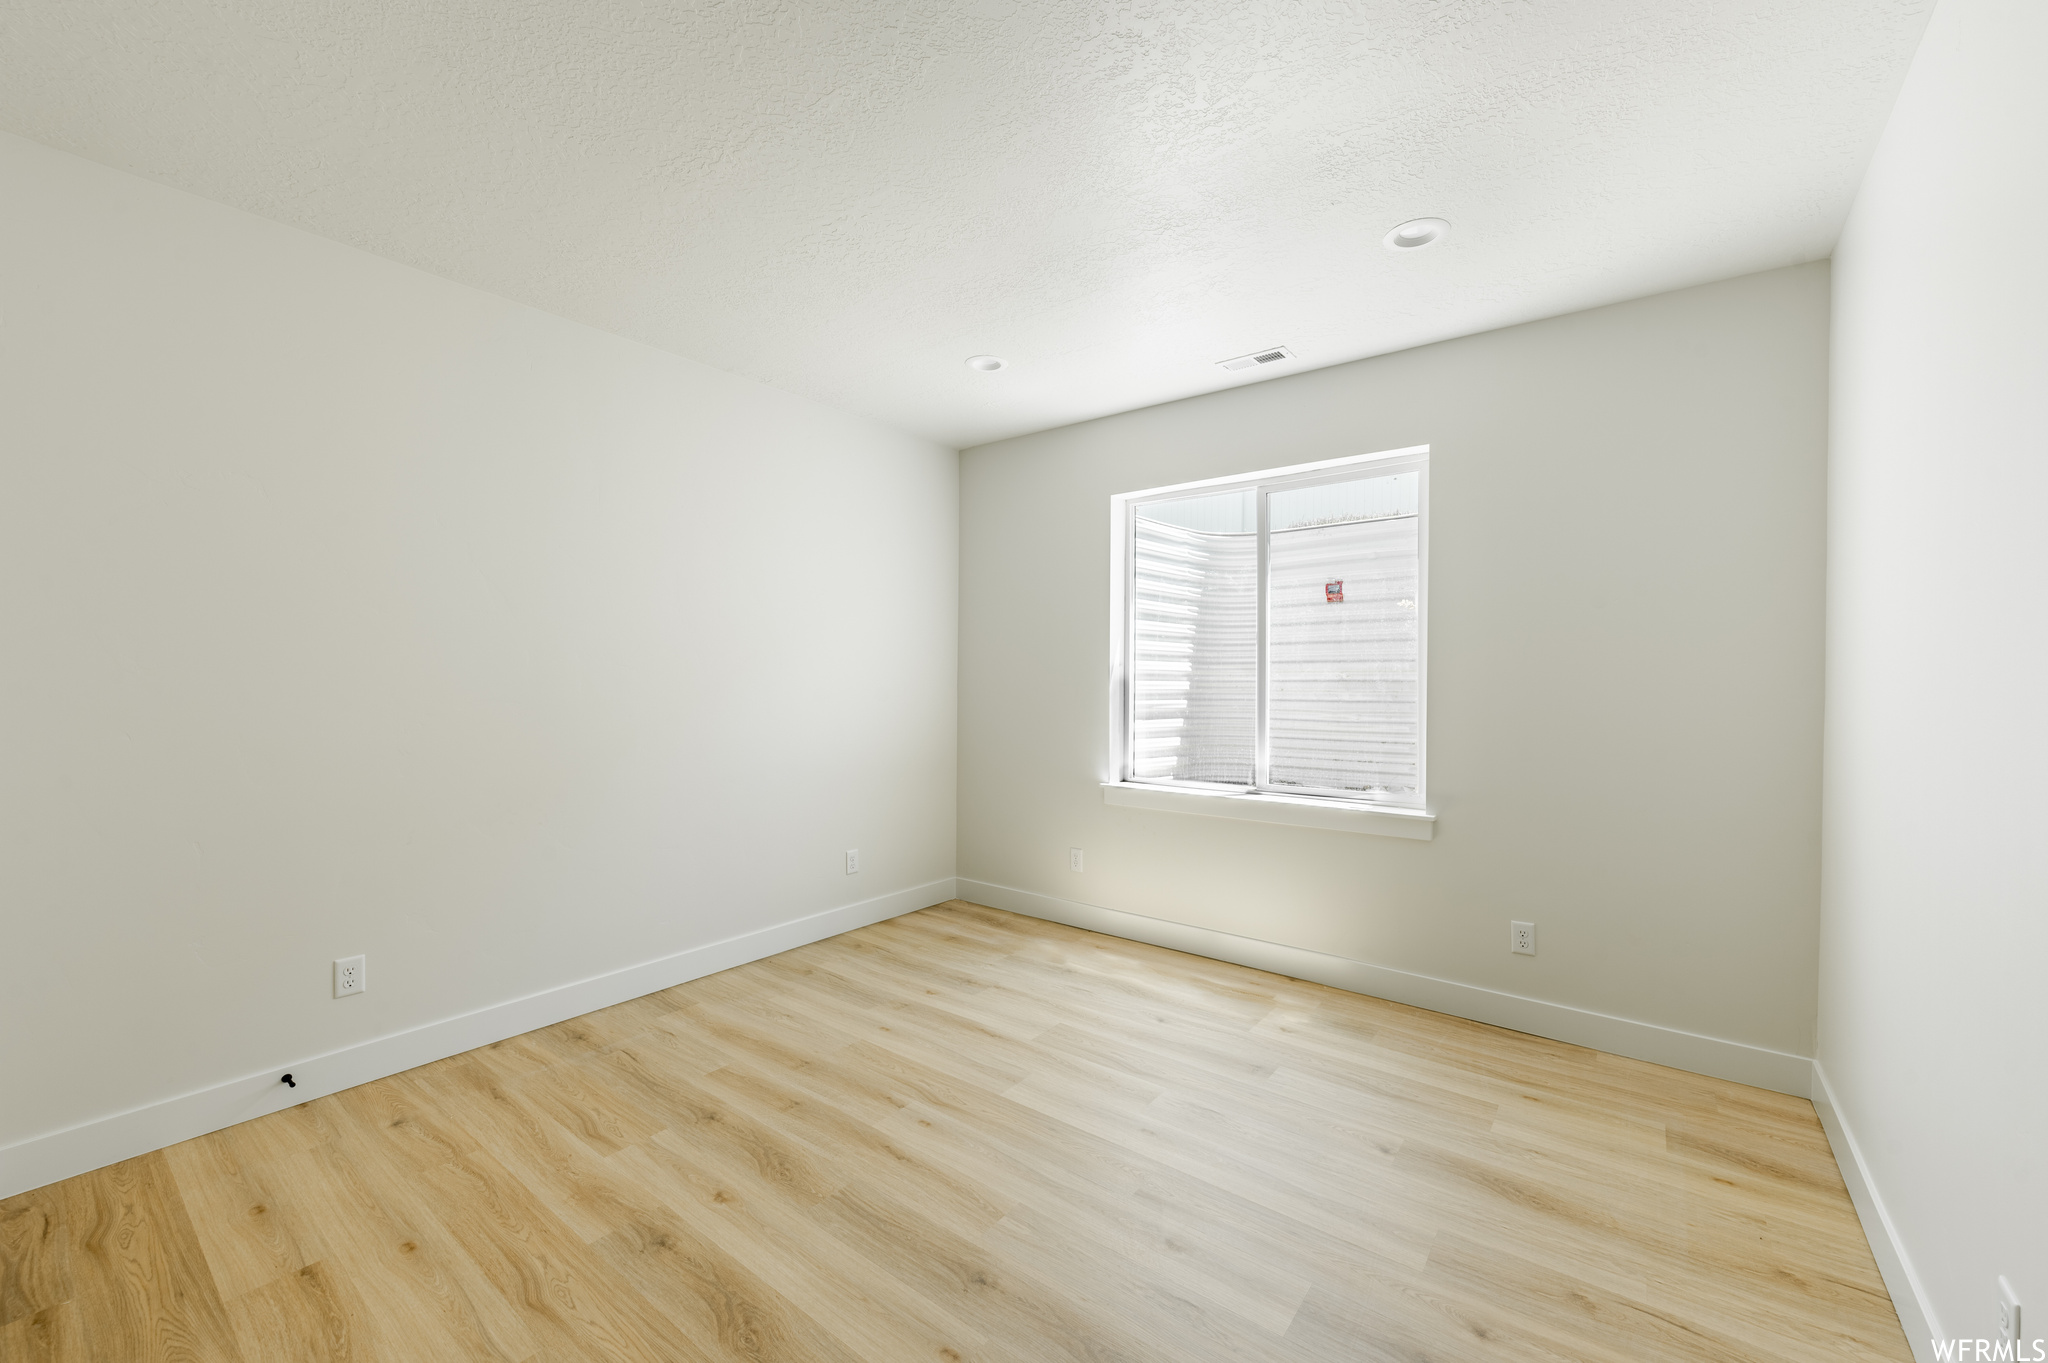 Basement Level Spare room featuring light LVP floors